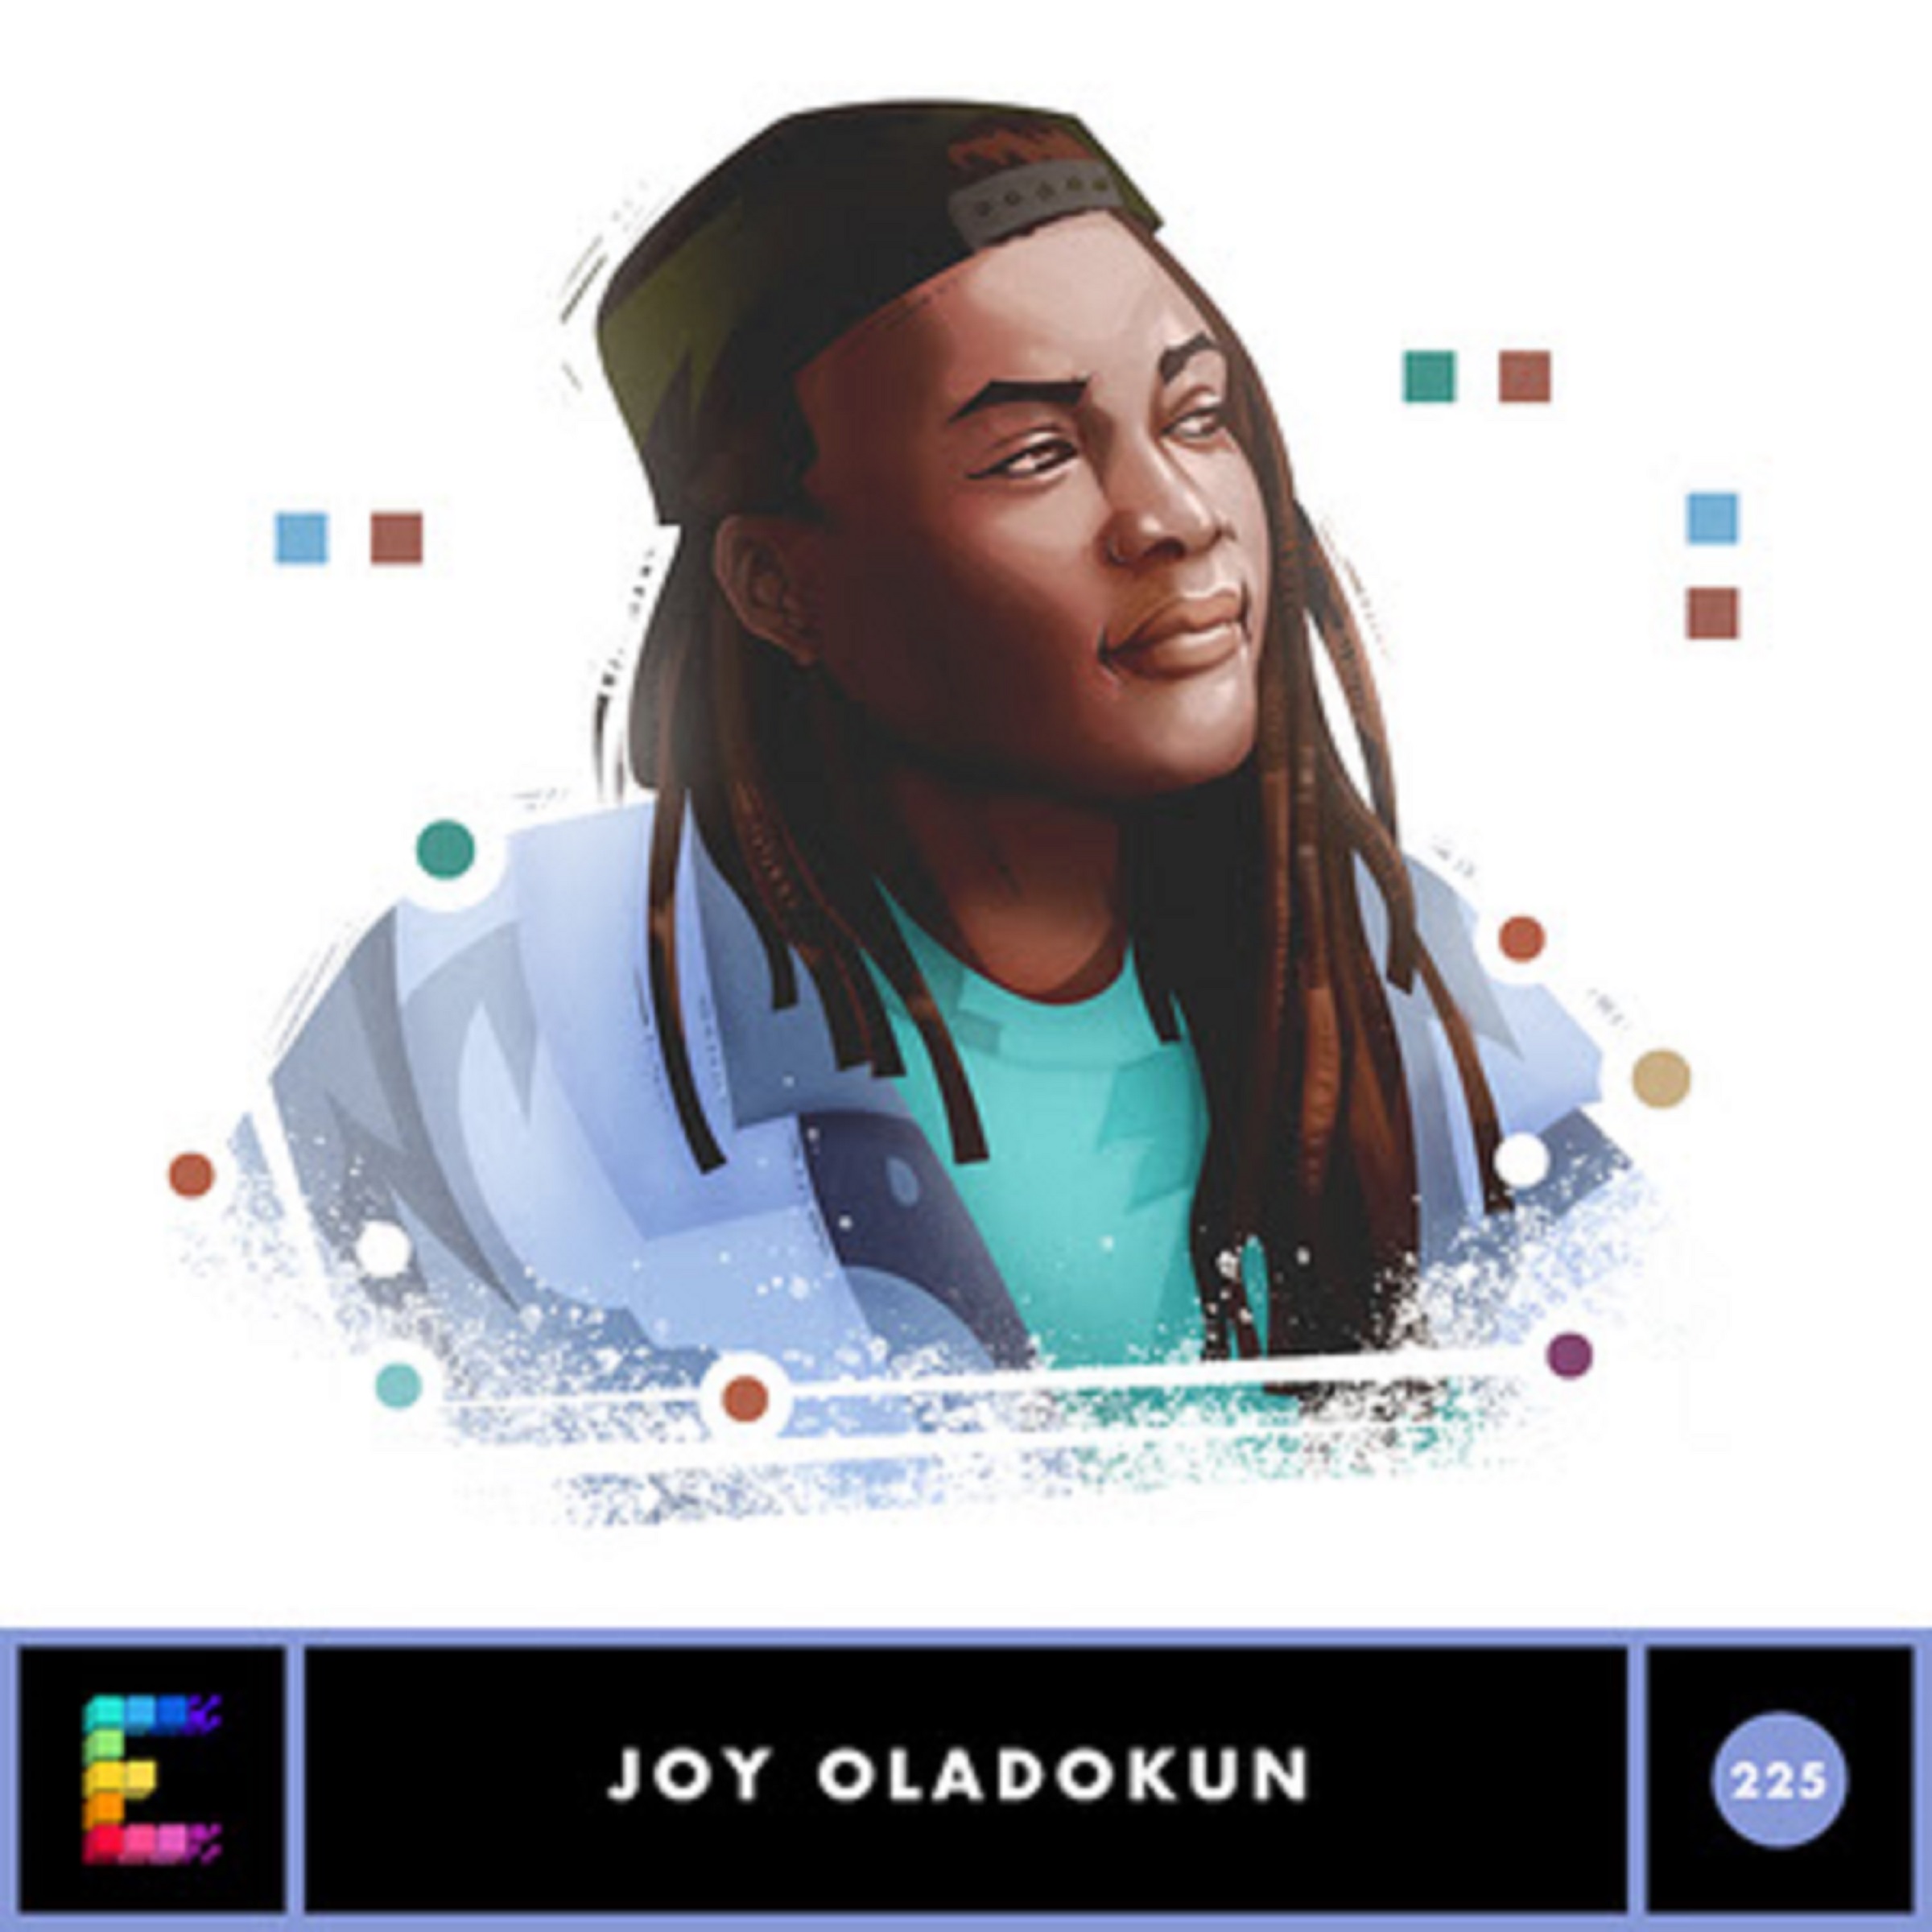 Joy Oladokun featured on “Song Exploder”